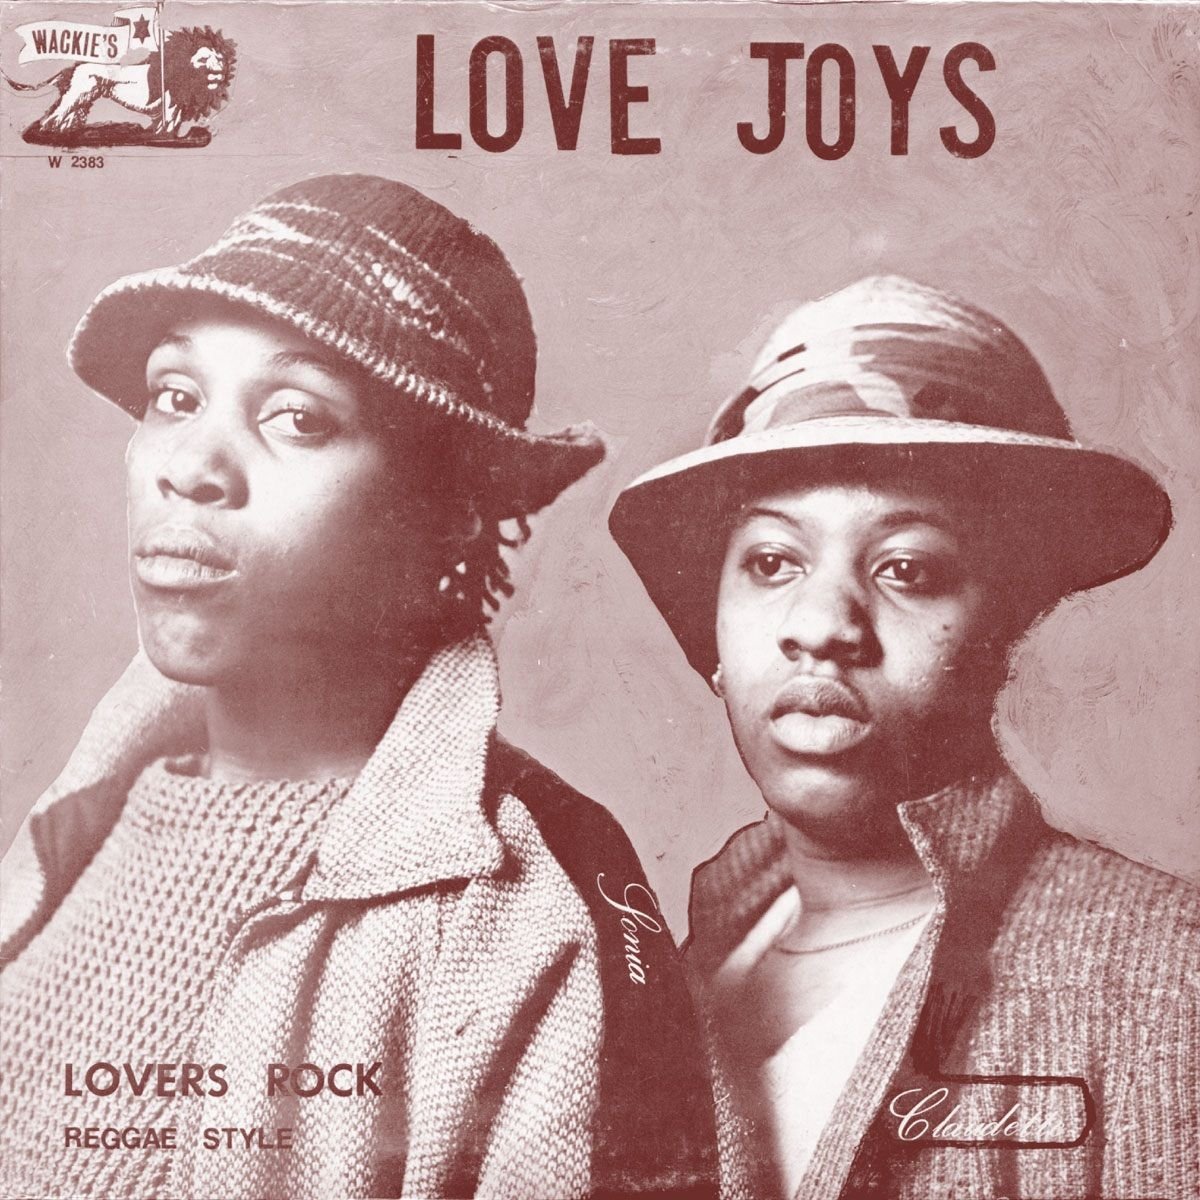 Лове джой. Lovers Rock. Loving Joy. June Lovejoy. Lovejoy альбом.